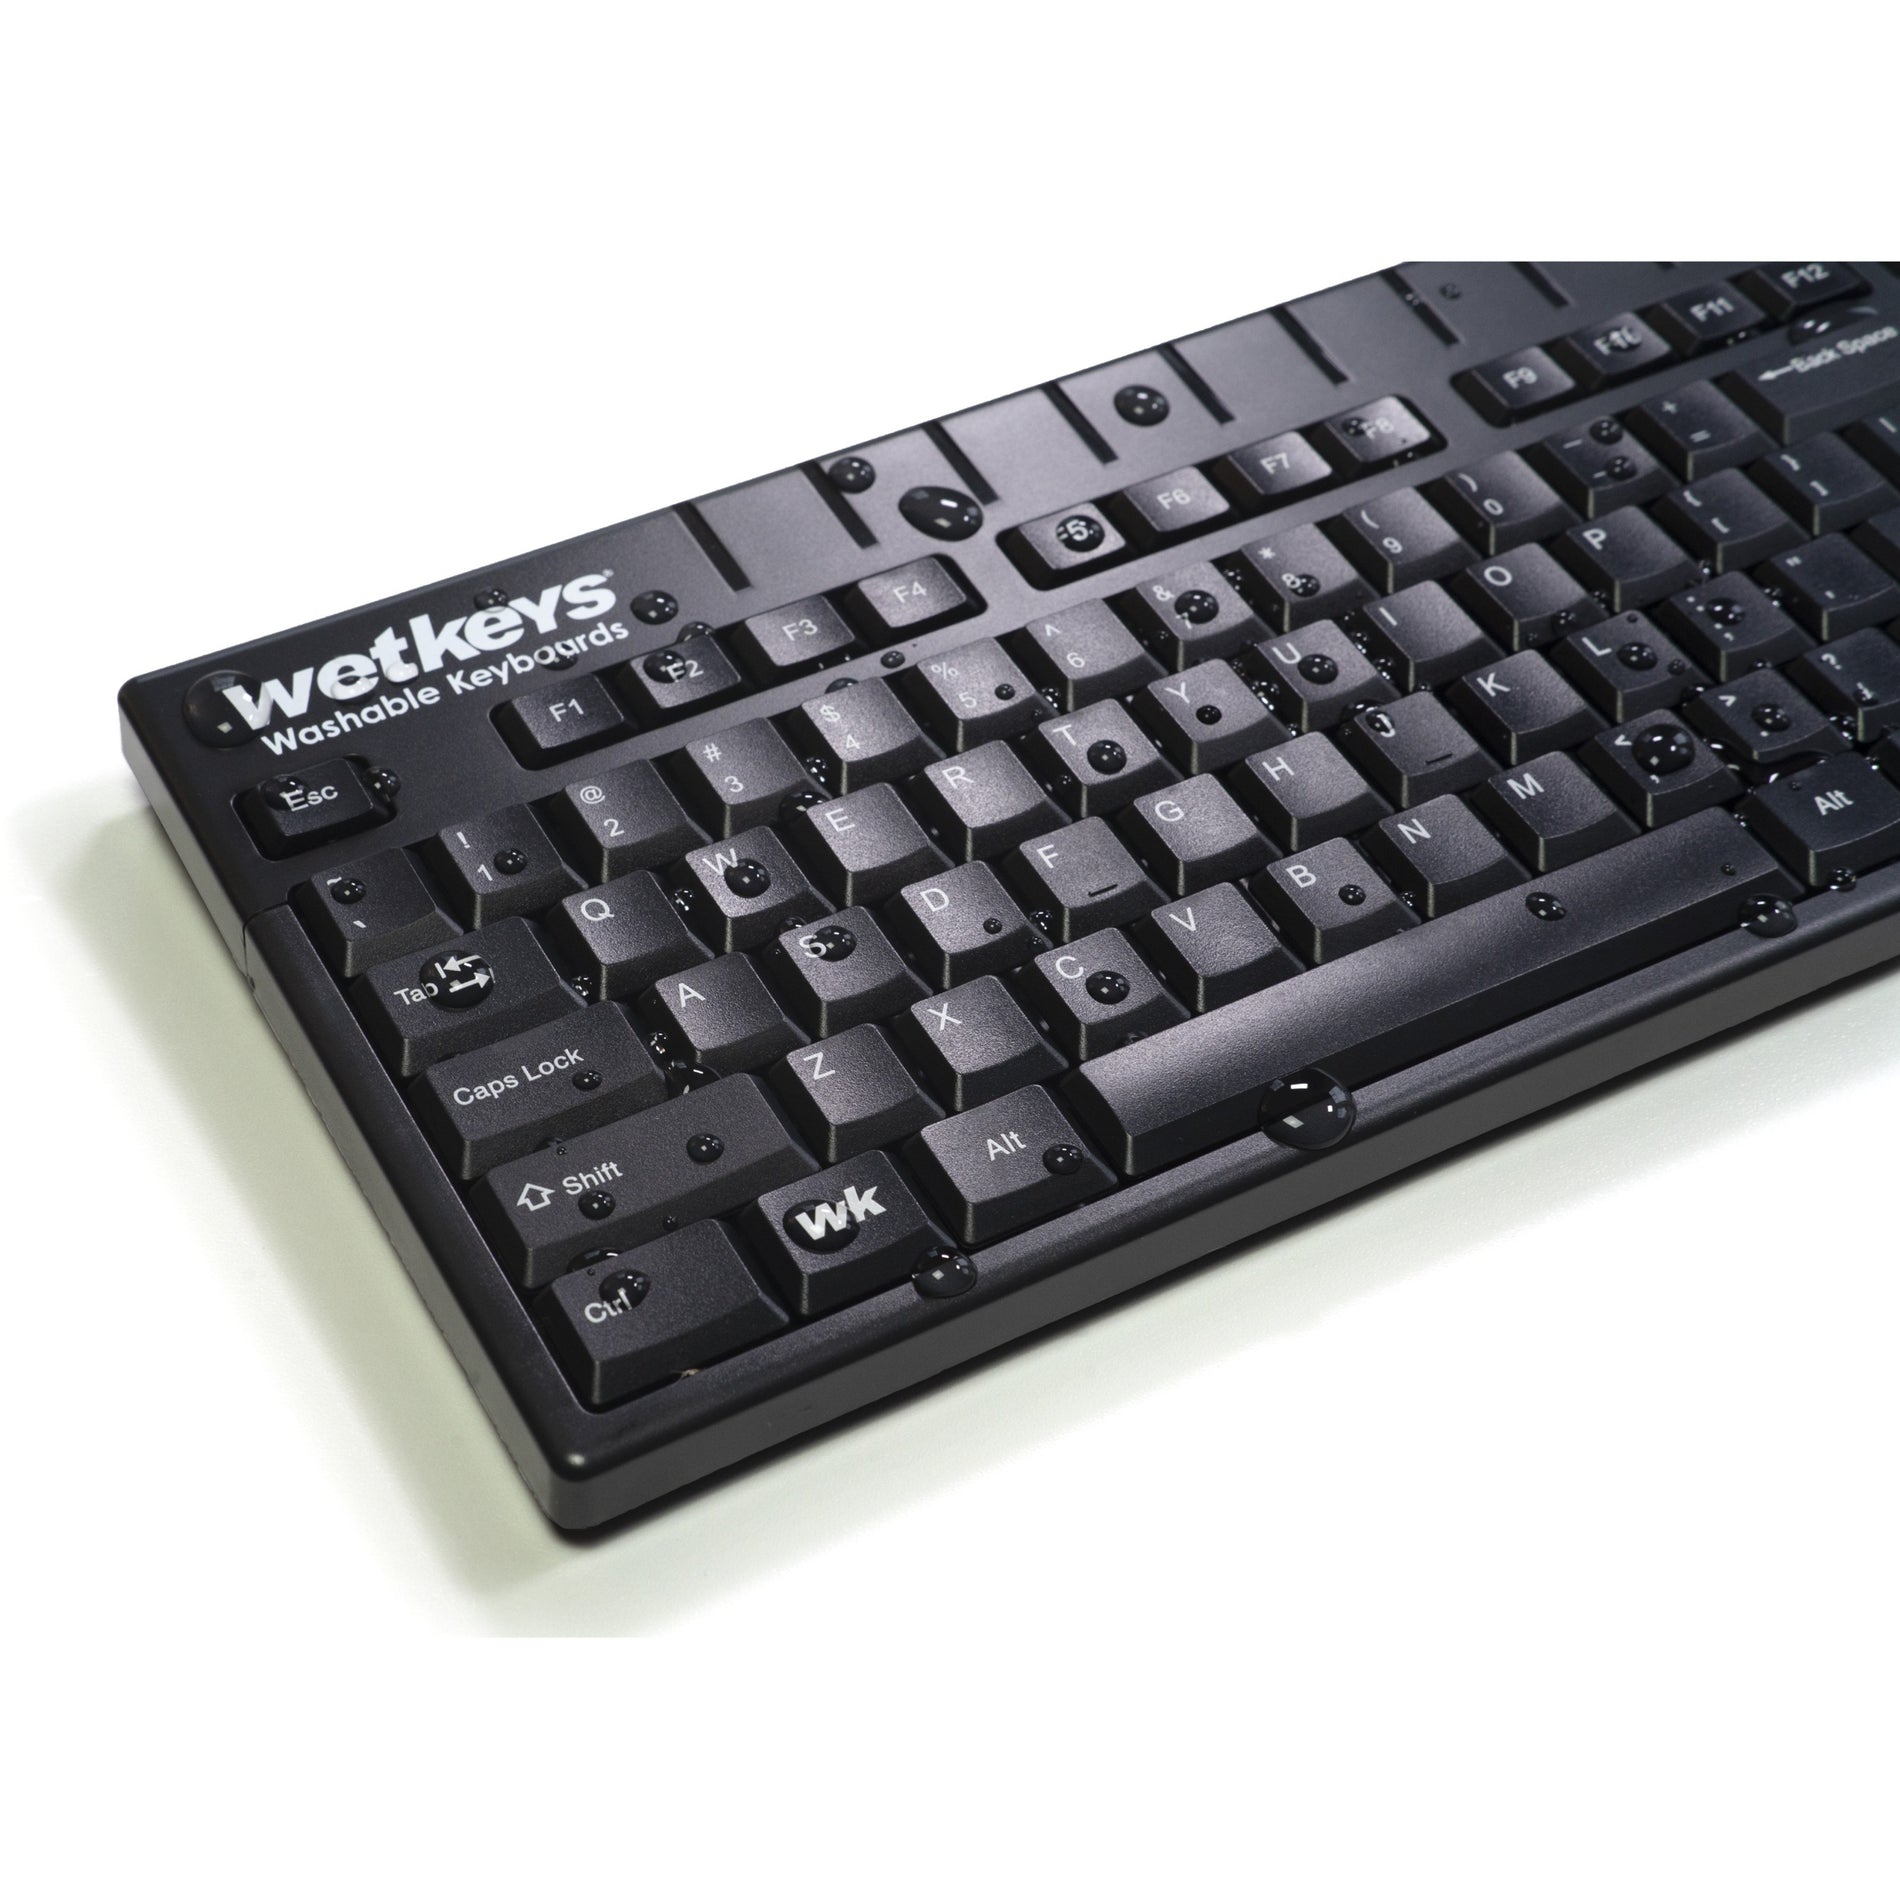 WetKeys Washable Keyboards KBWKABS104-BK Waterproof Professional-grade Full-size Keyboard w/Number-pad USB Black, 1 Year Limited Warranty, Dustproof, Waterproof, Chemical Resistant and Washable